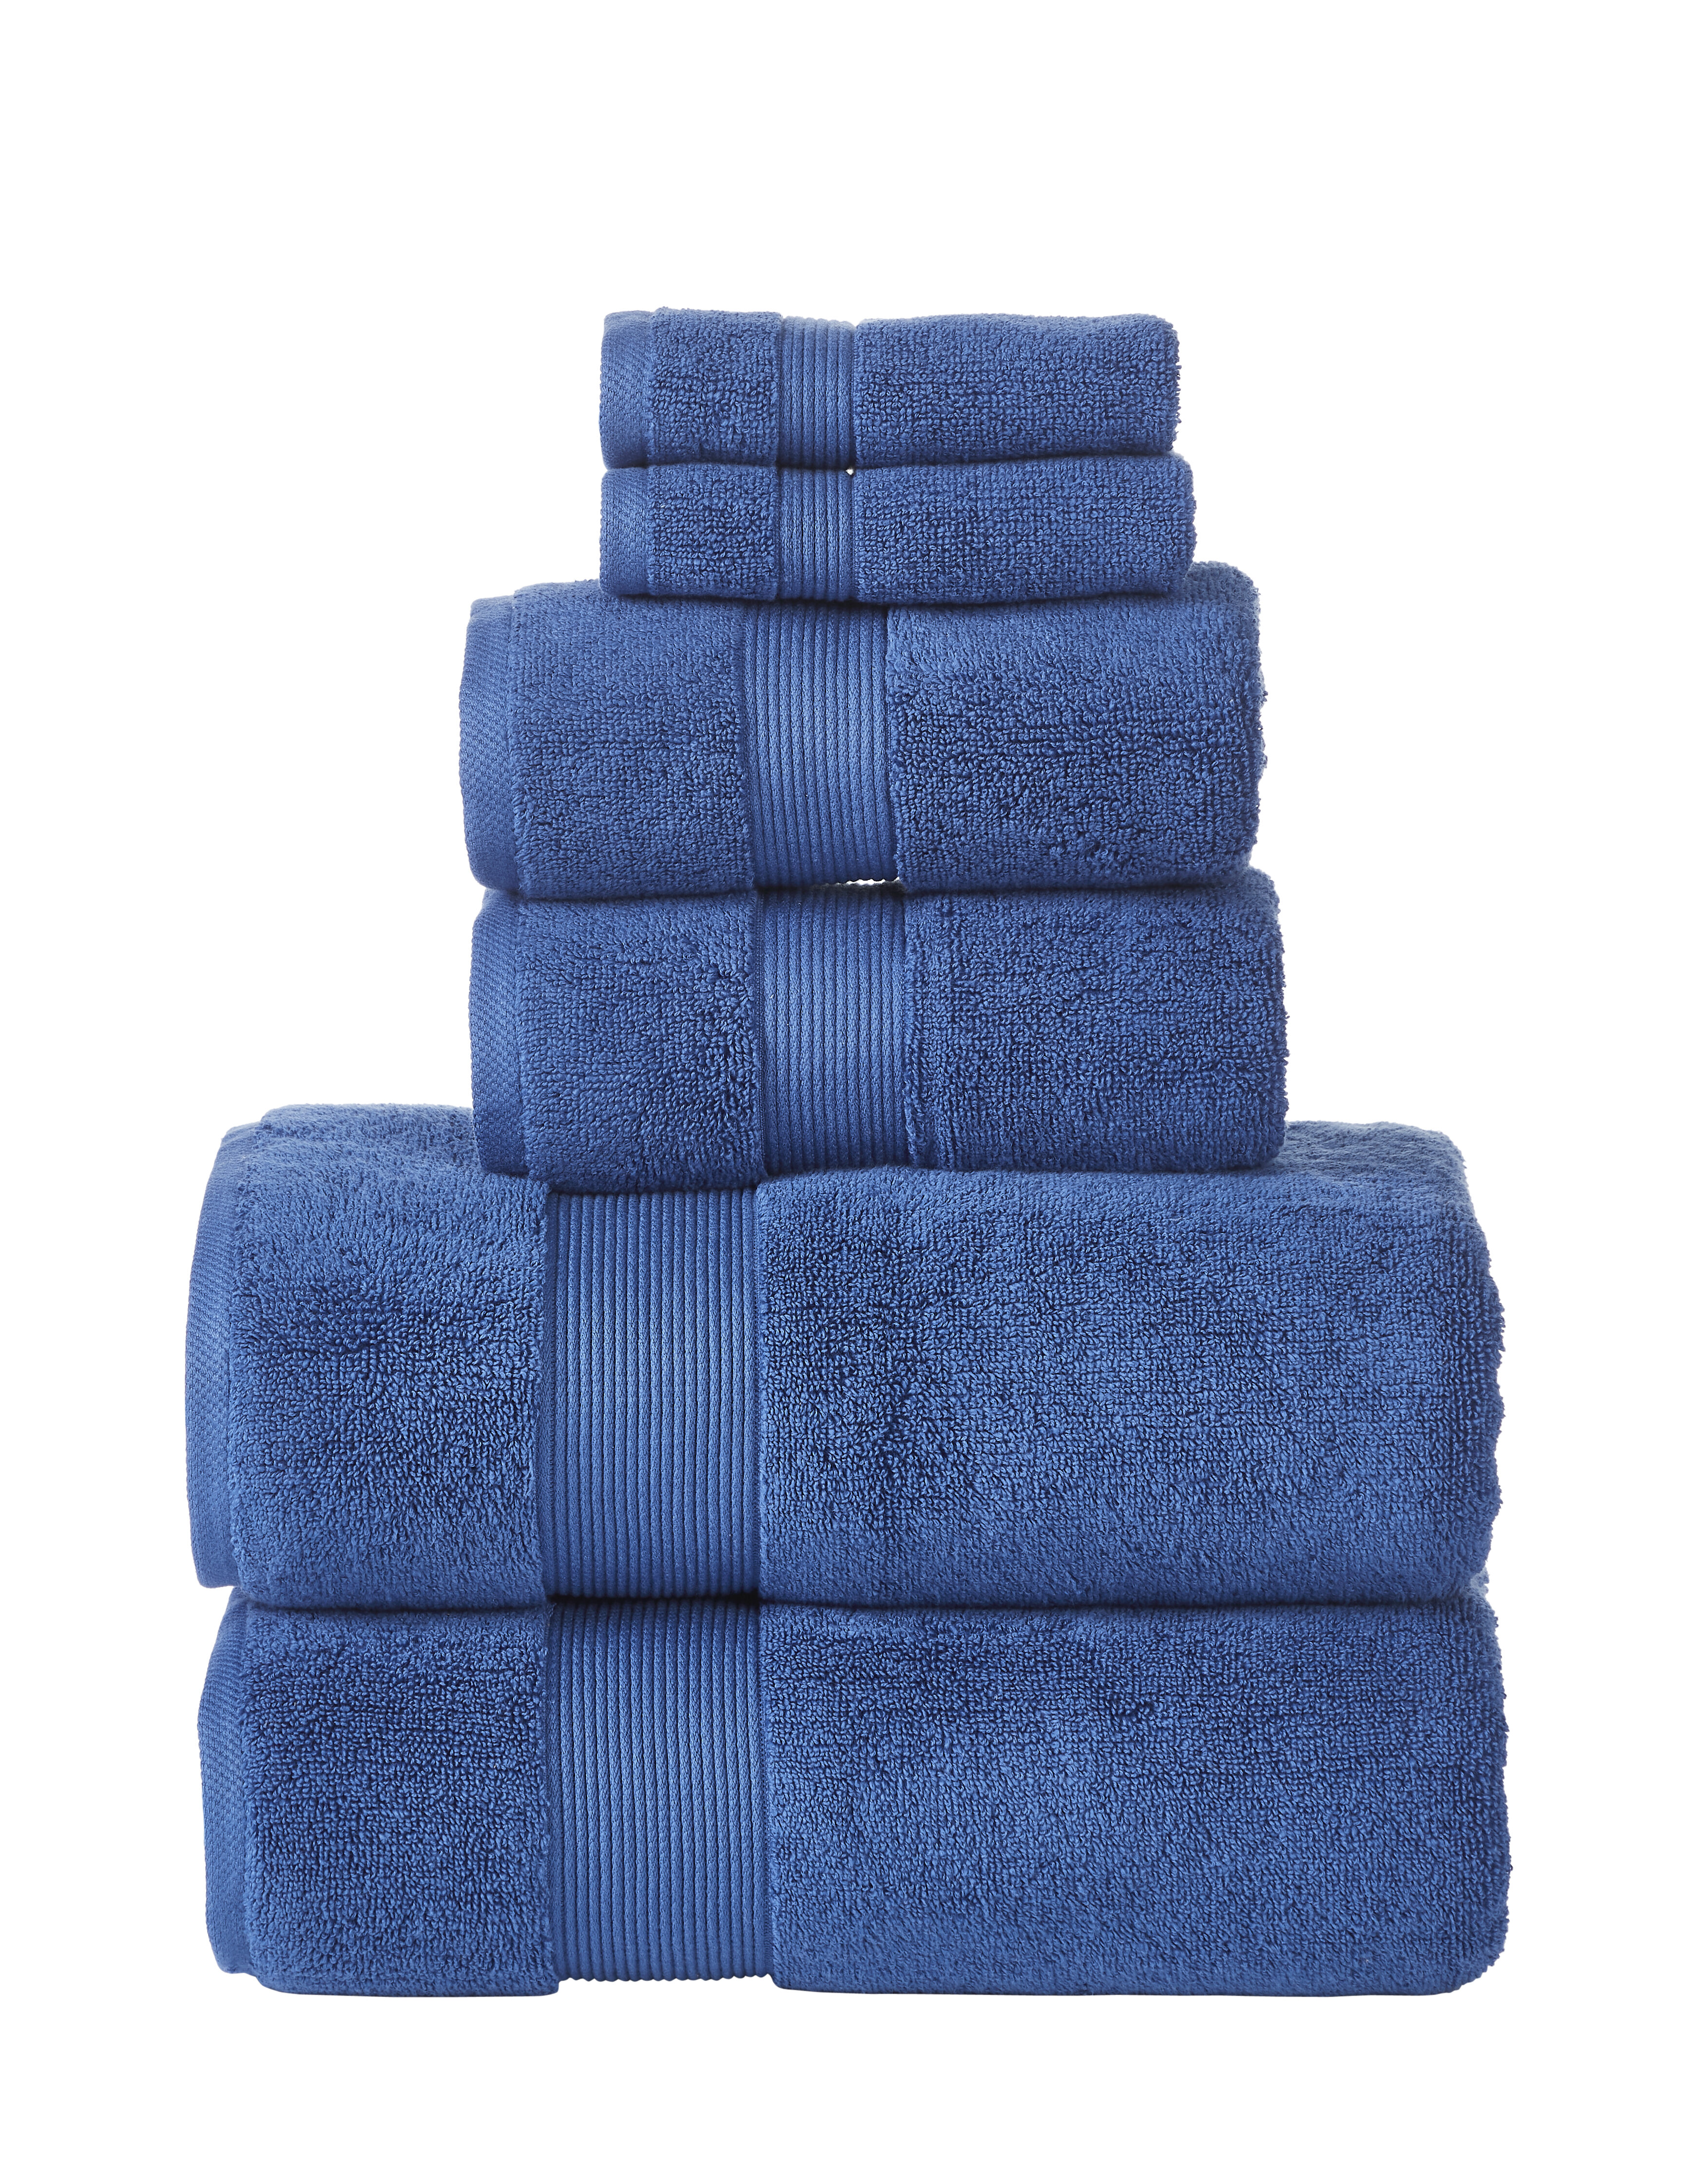 Soft Hotel Towels 6 Piece Set (Navy), Blue